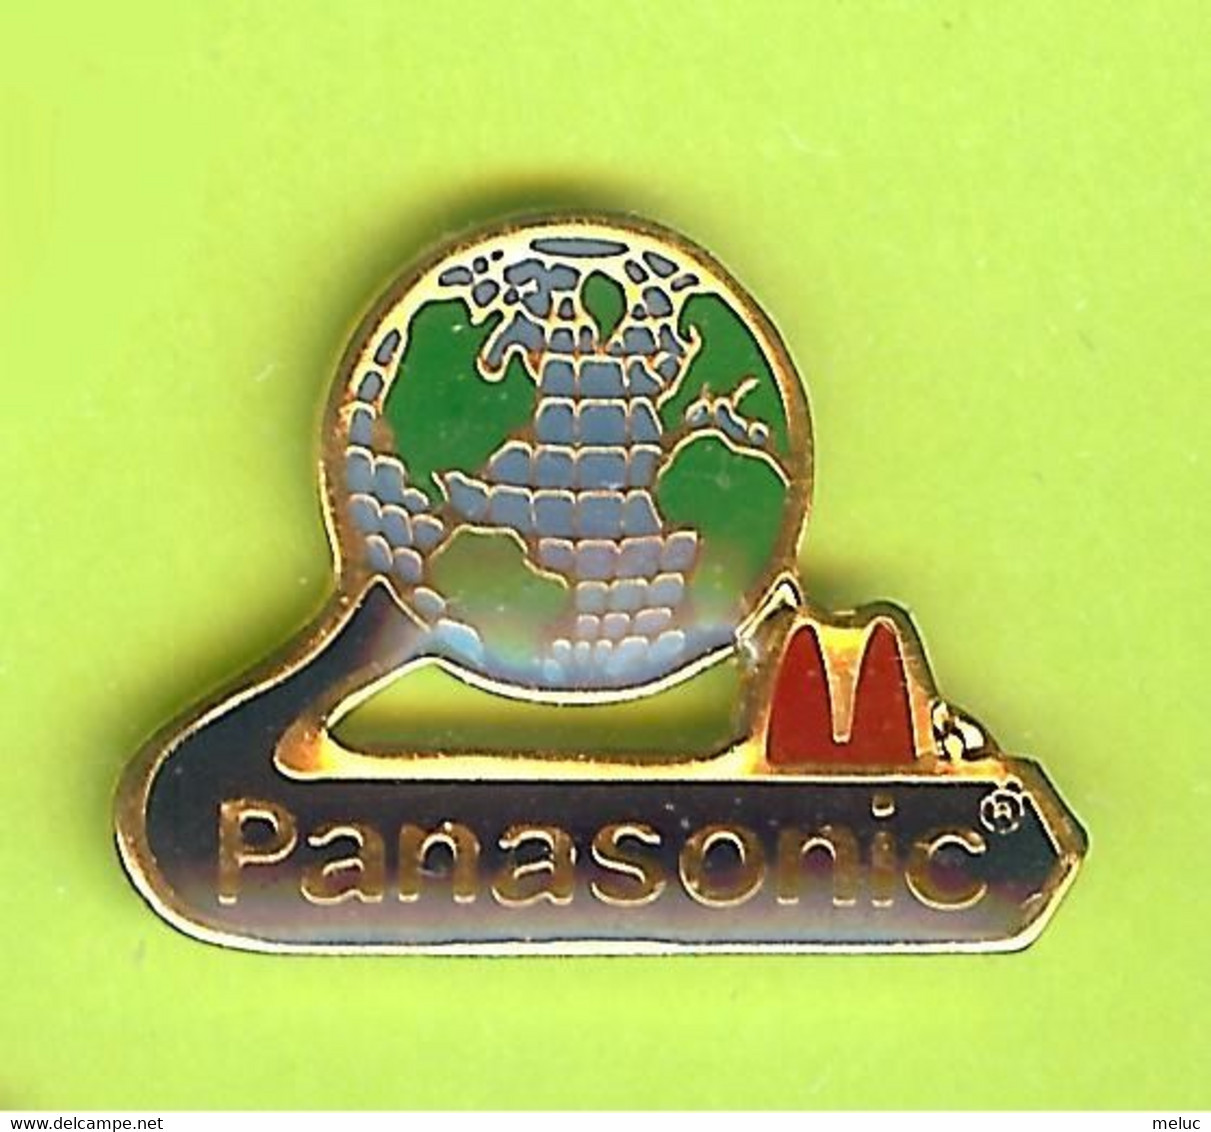 Pin's Mac Do McDonald's Panasonic Globe - 4L25 - McDonald's